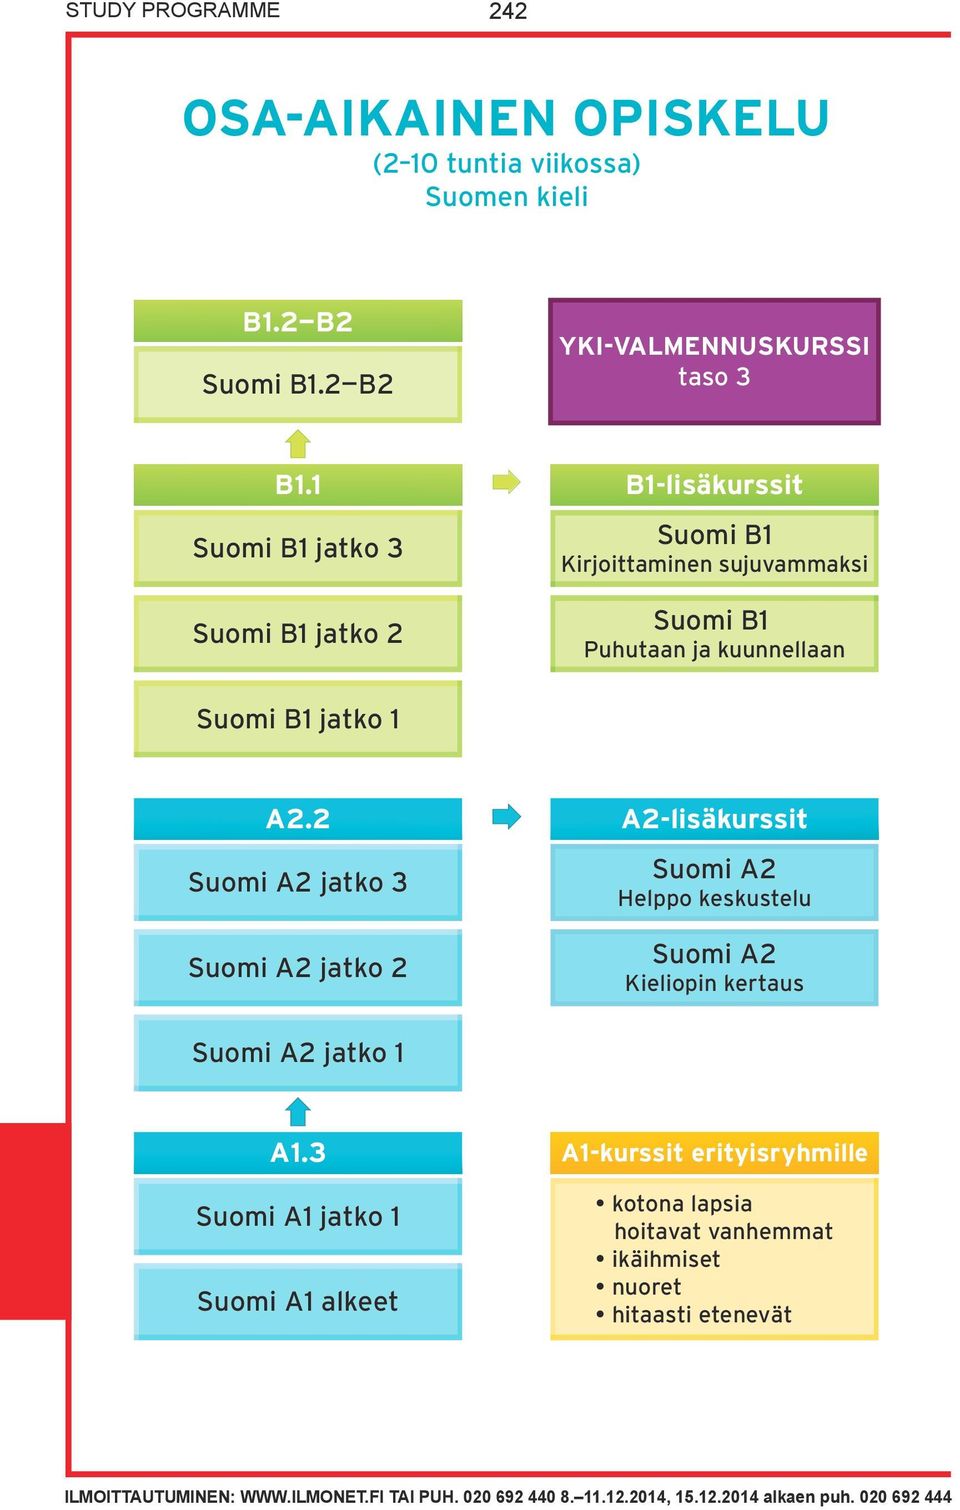 2 Suomi A2 jatko 3 Suomi A2 jatko 2 A2-lisäkurssit Suomi A2 Helppo keskustelu Suomi A2 Kieliopin kertaus Suomi A2 jatko 1 A1.